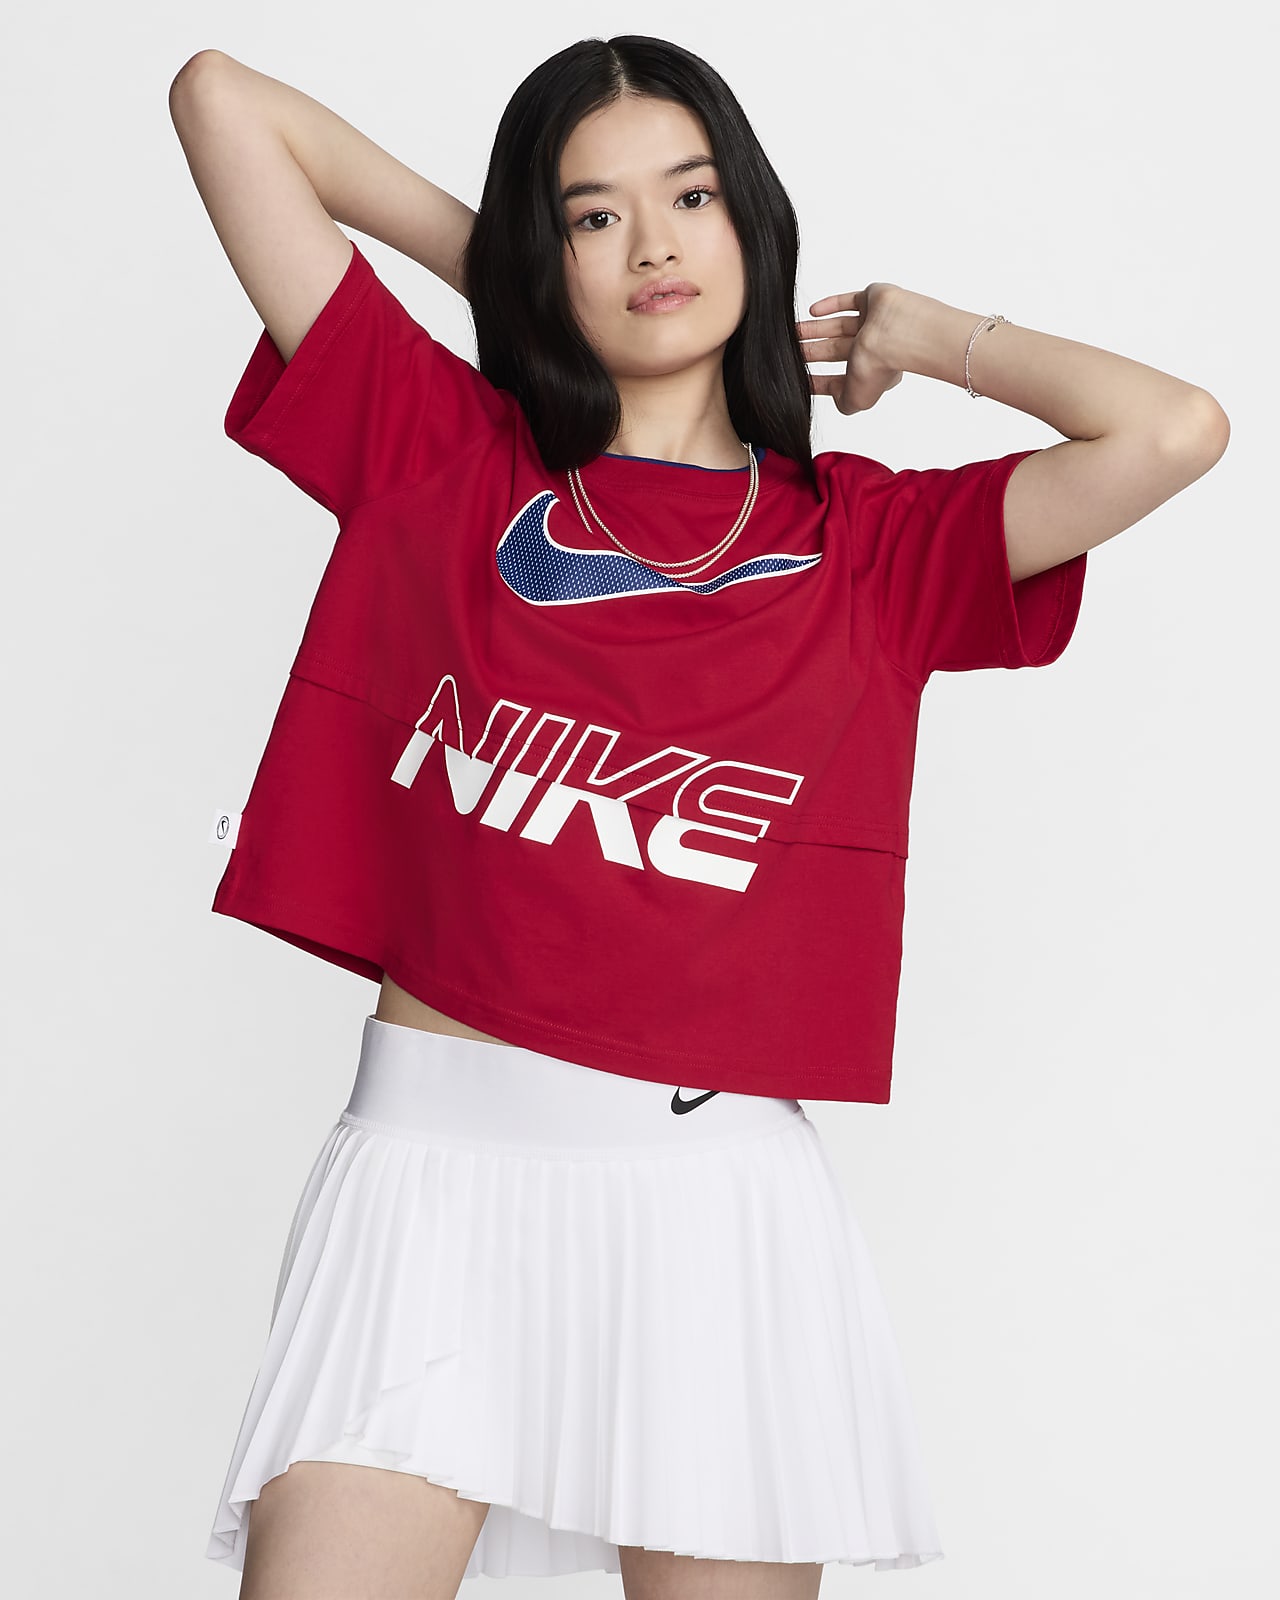 Nike Sportswear 女款短袖上衣